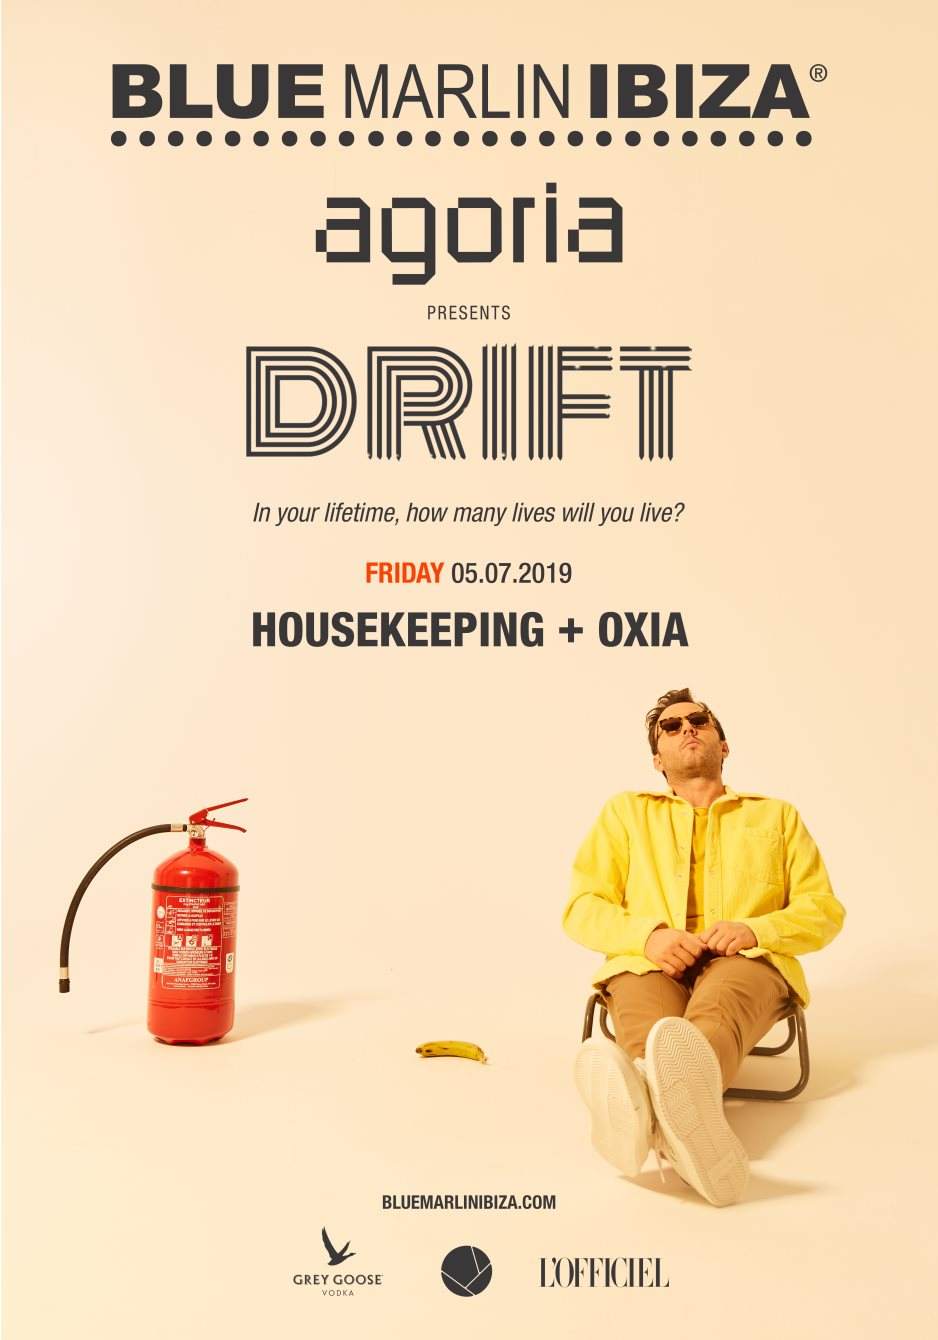 Agoria presents Drift - Página trasera